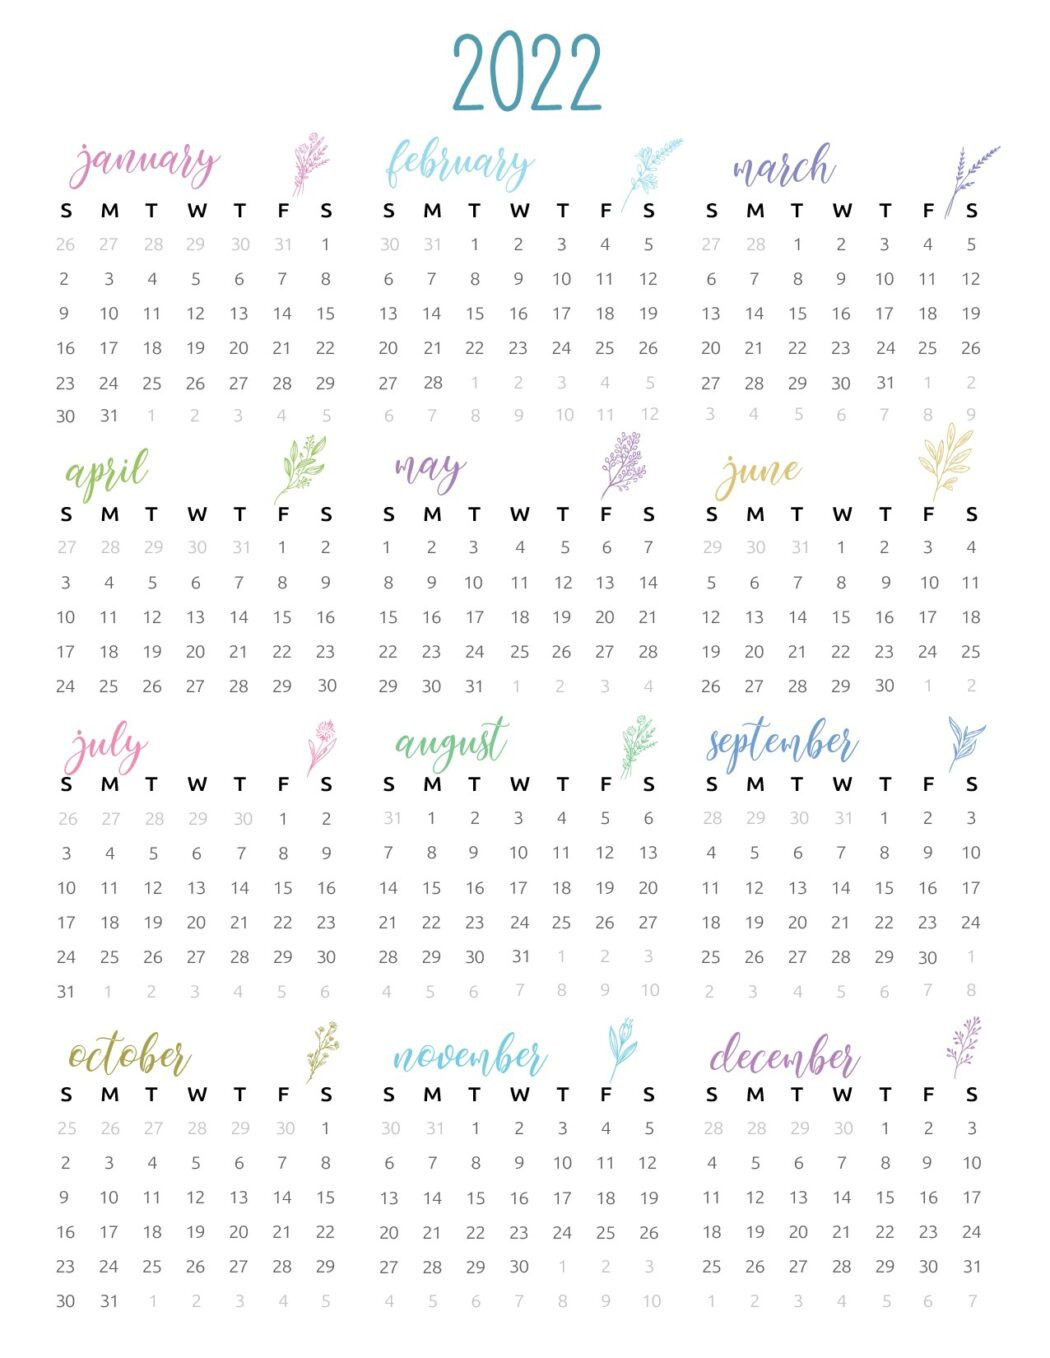 2022 Yearly Calendar Printable - World Of Printables  Free Printable Calendar 2022 Plants